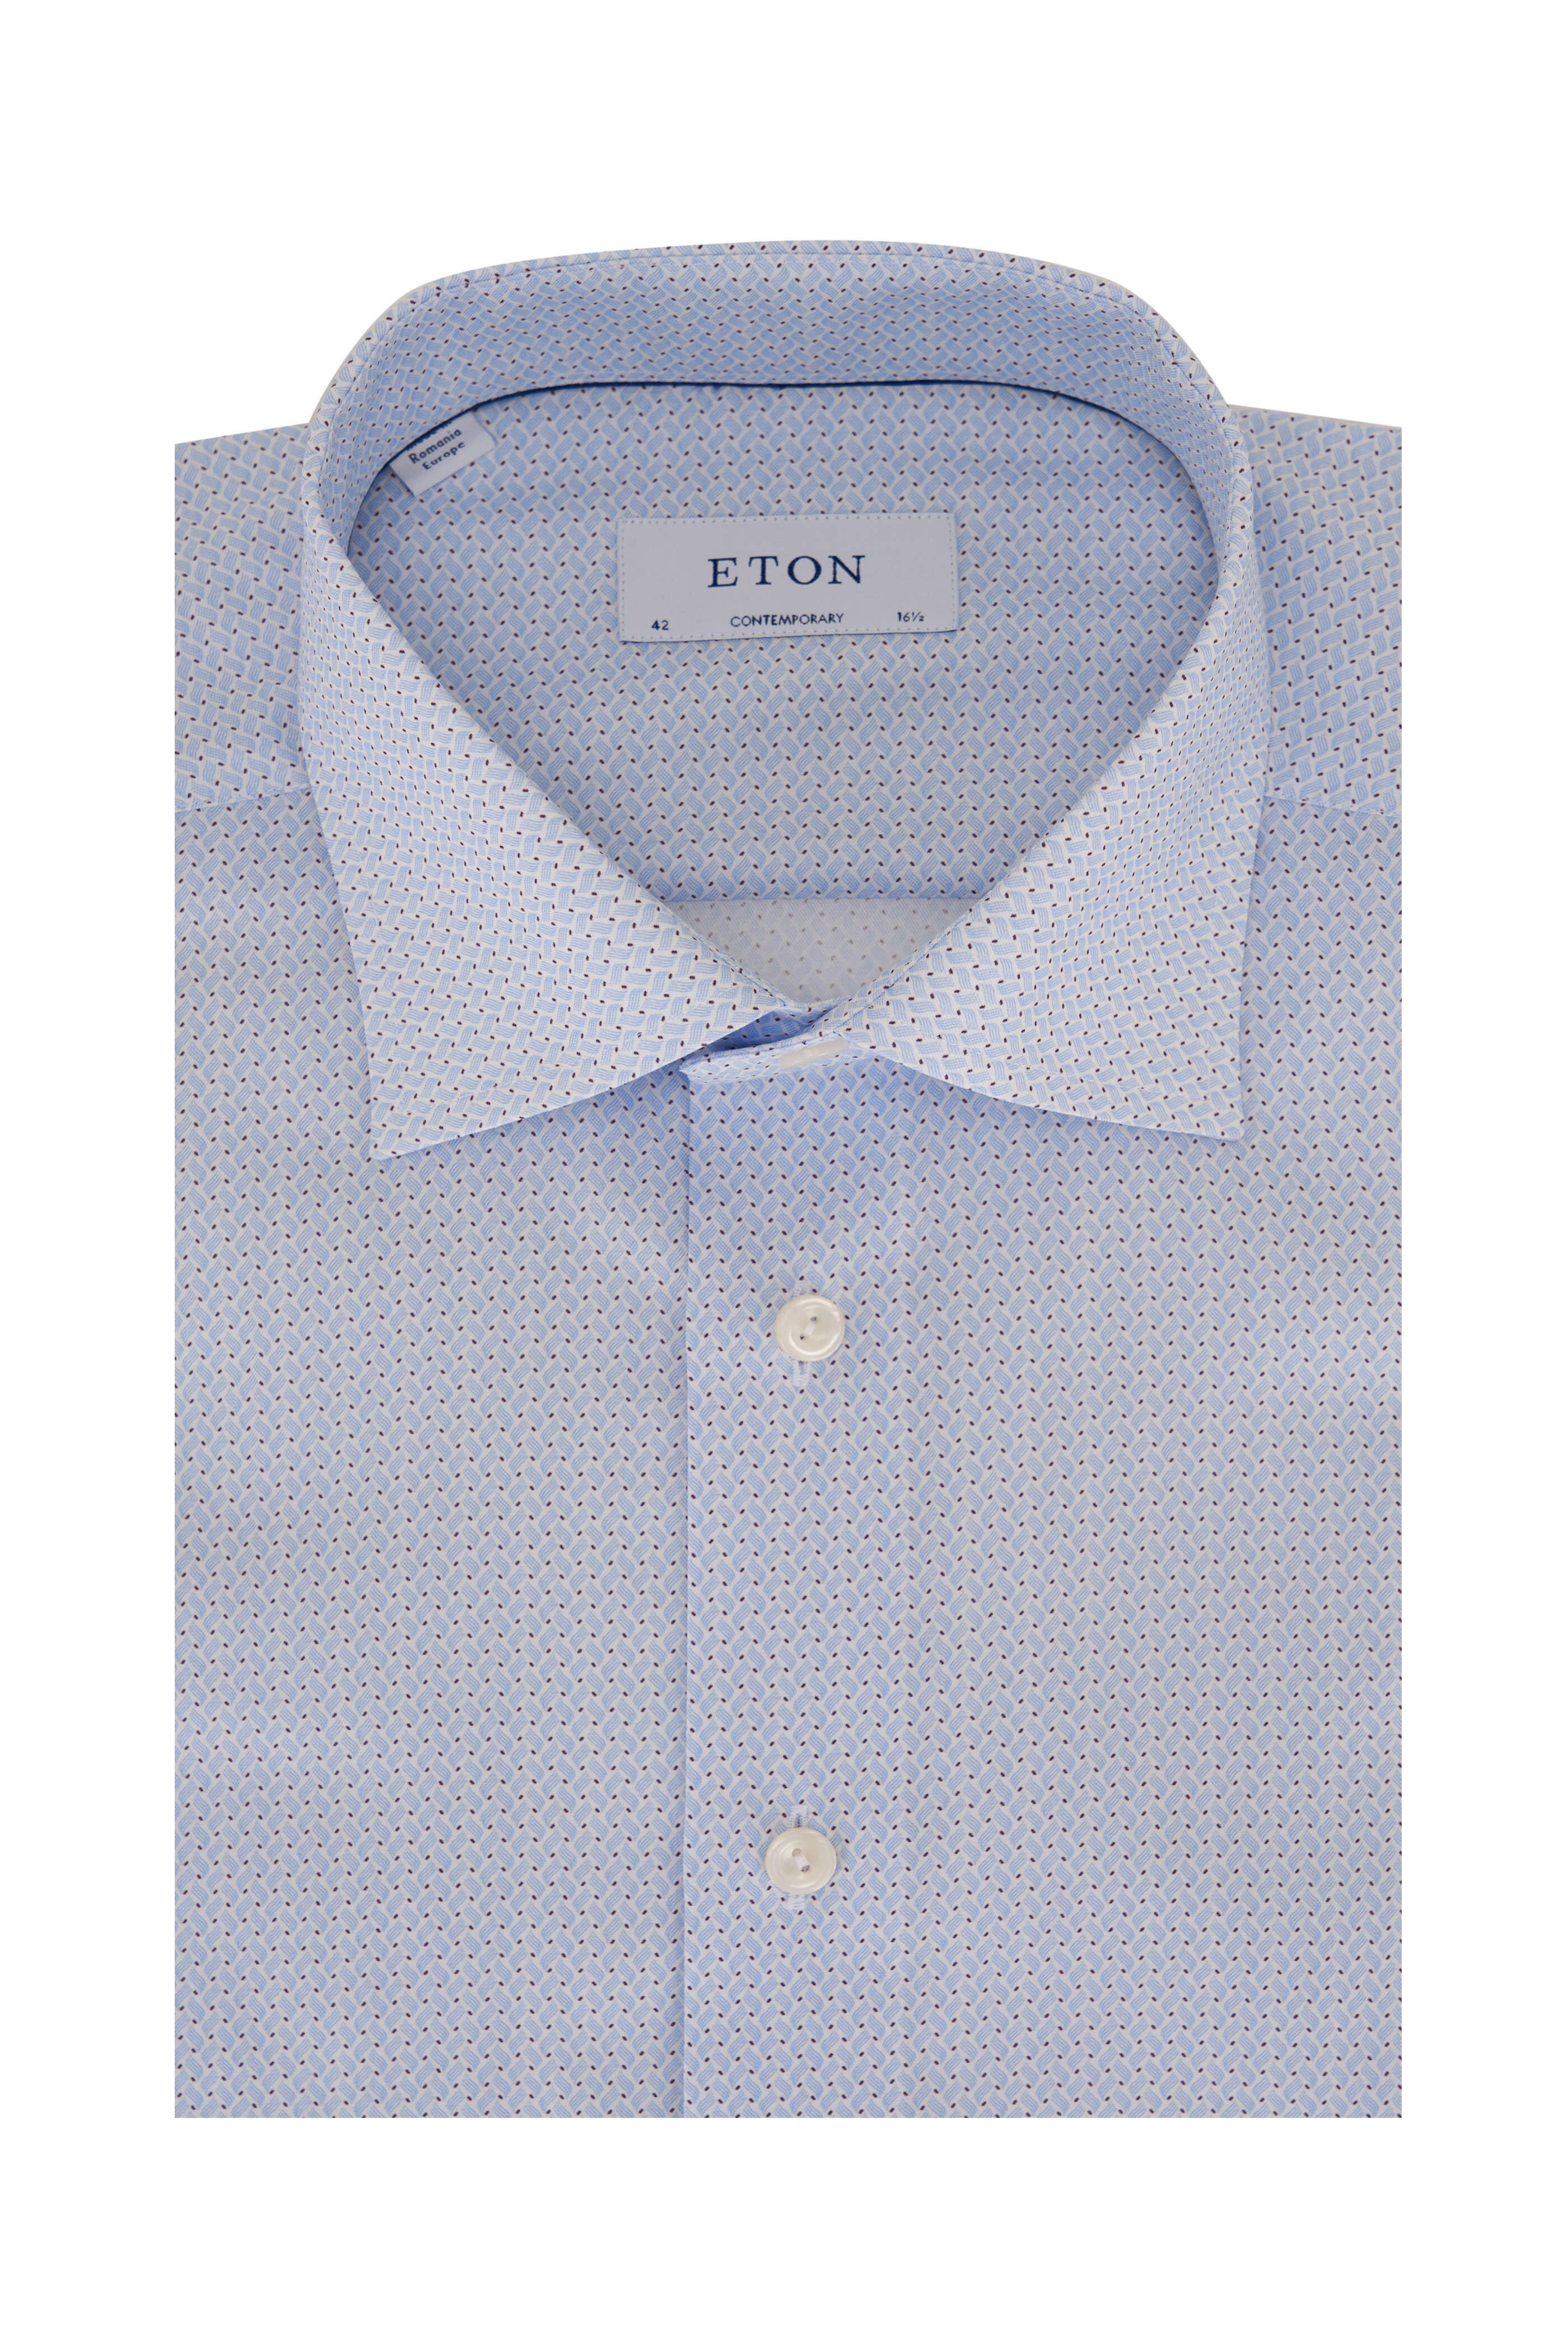 Eton - Light Blue Geometric Print Cotton Dress Shirt